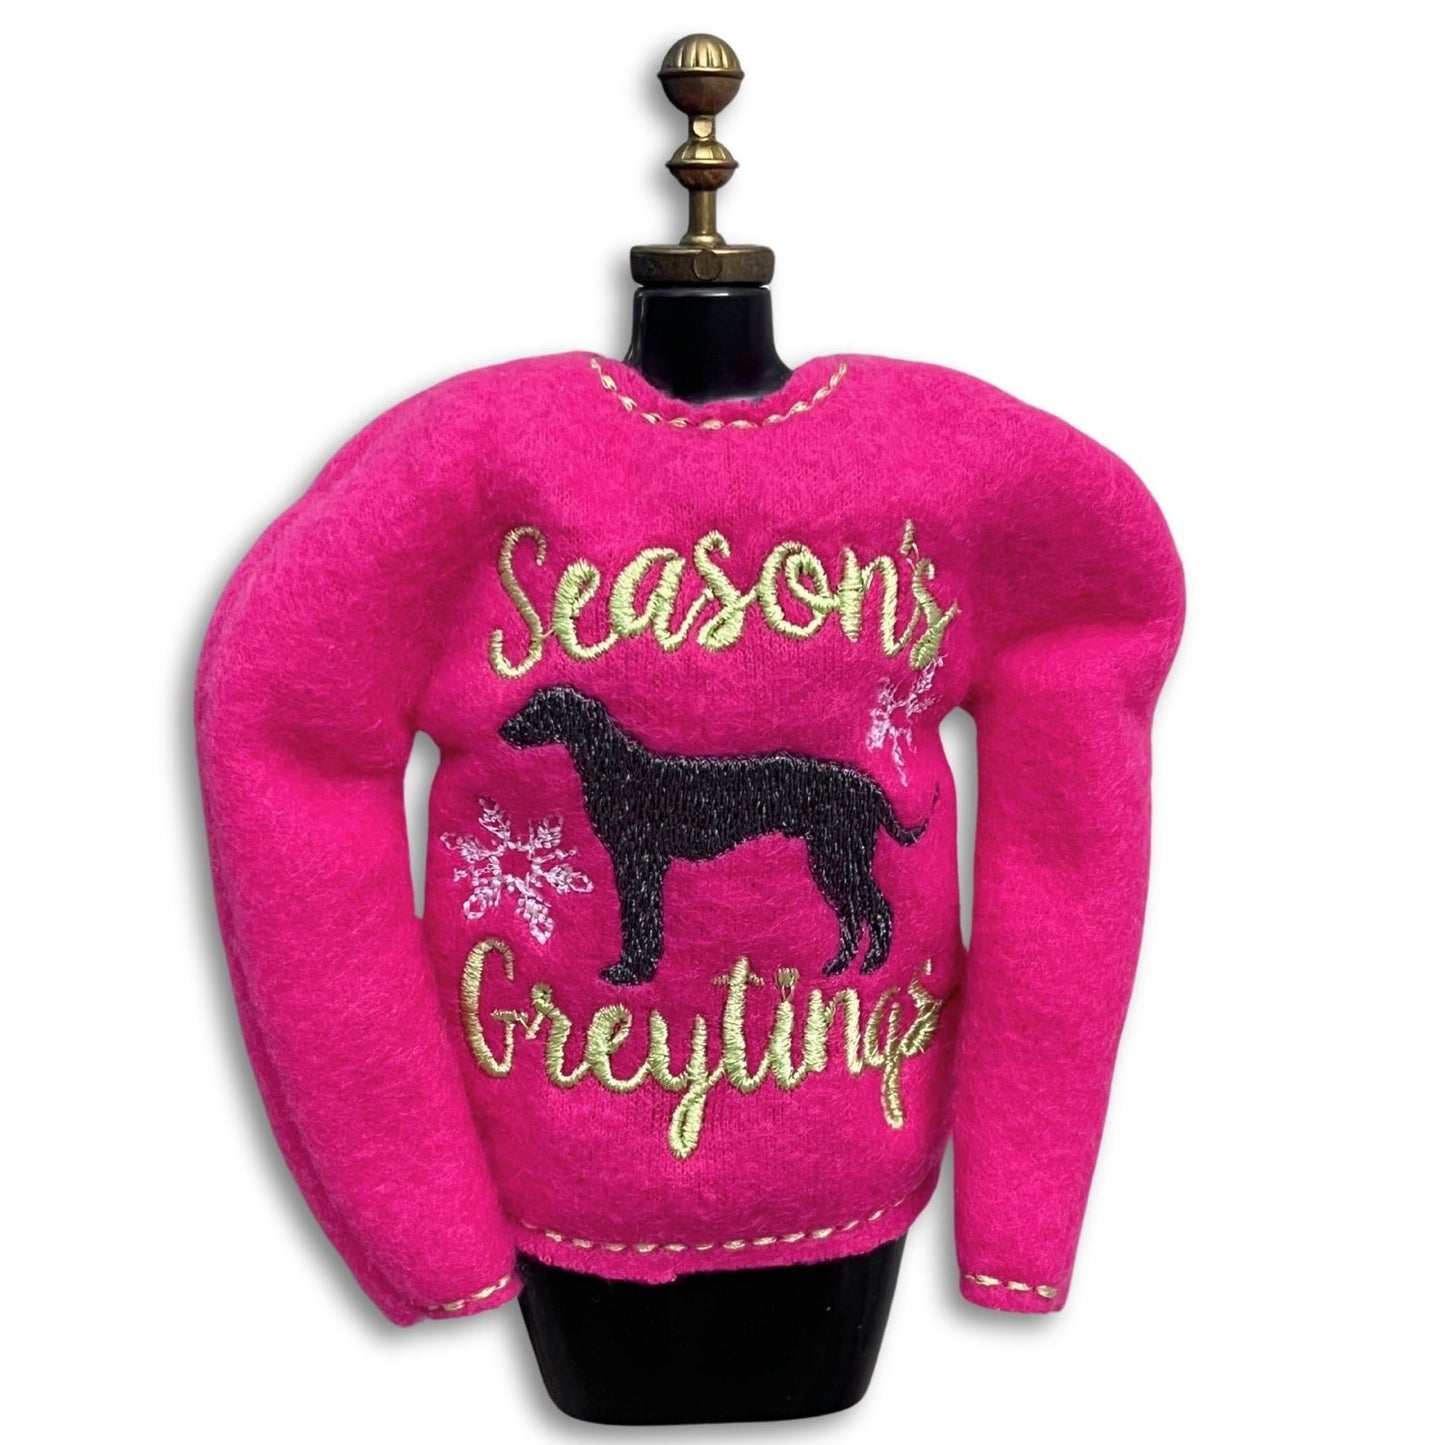 Elf Sweater Season's Greytings Greyhound Hot Pink